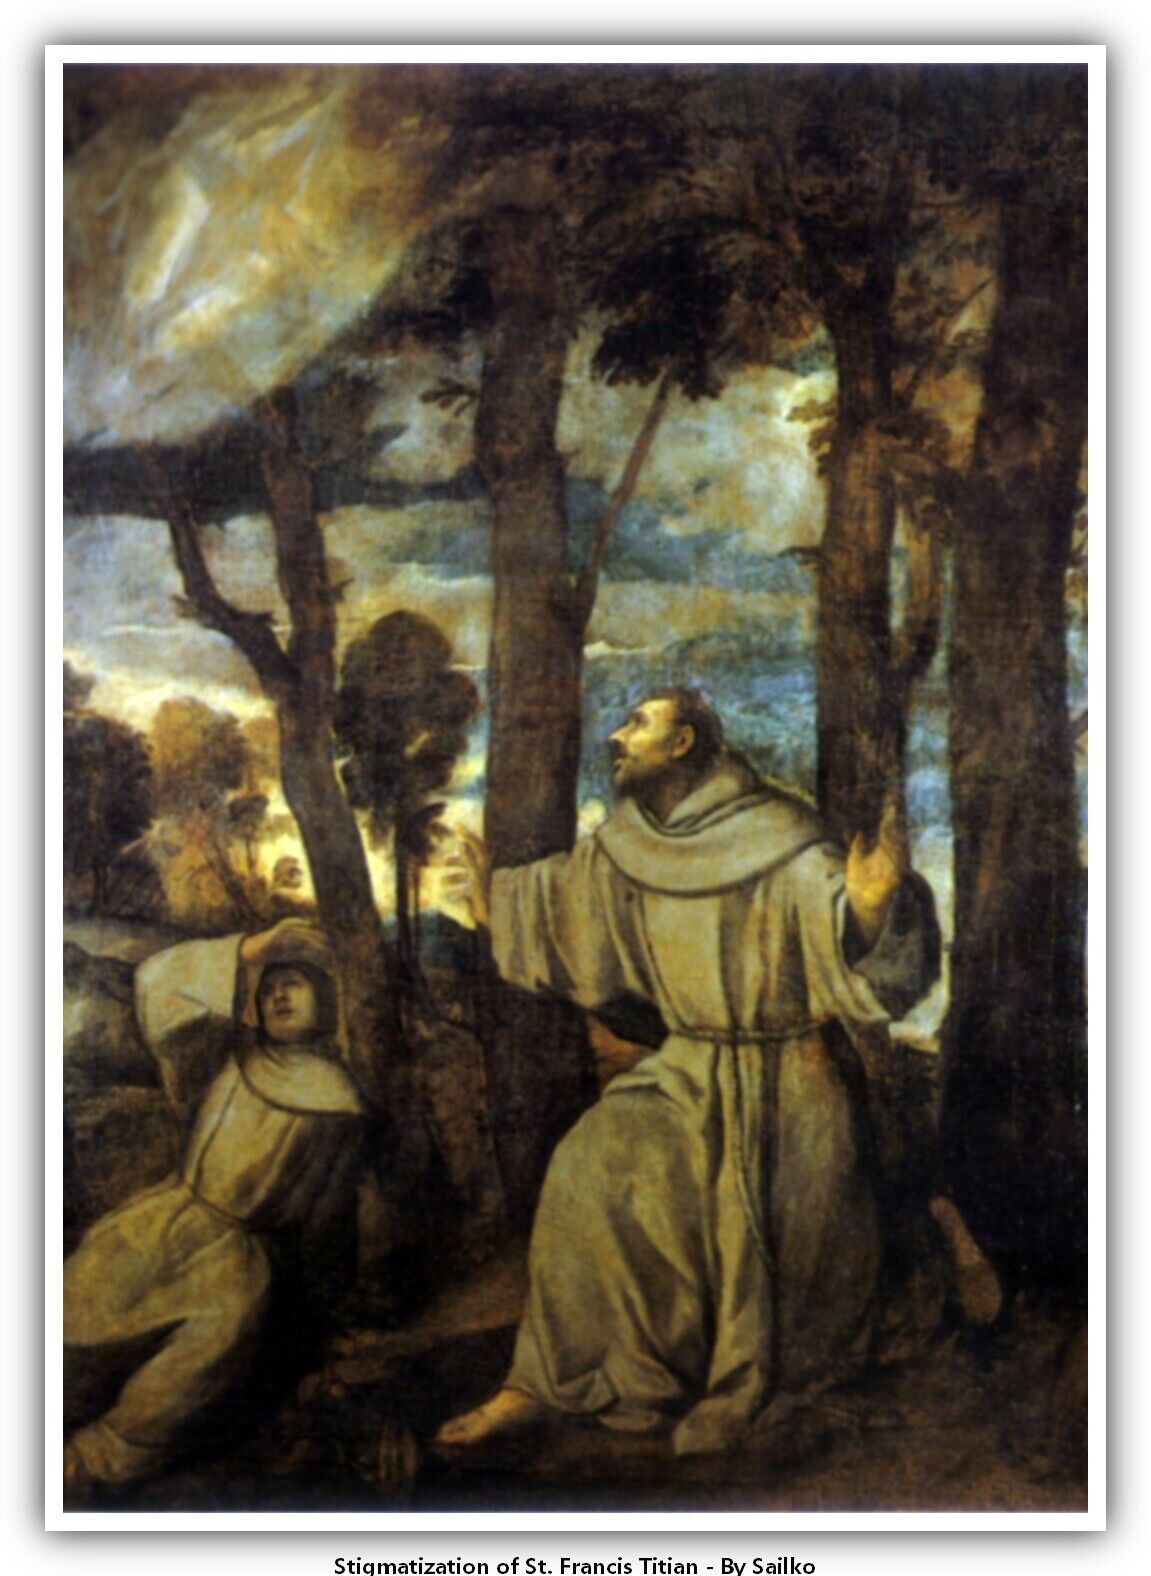 Stigmatization of St. Francis Titian